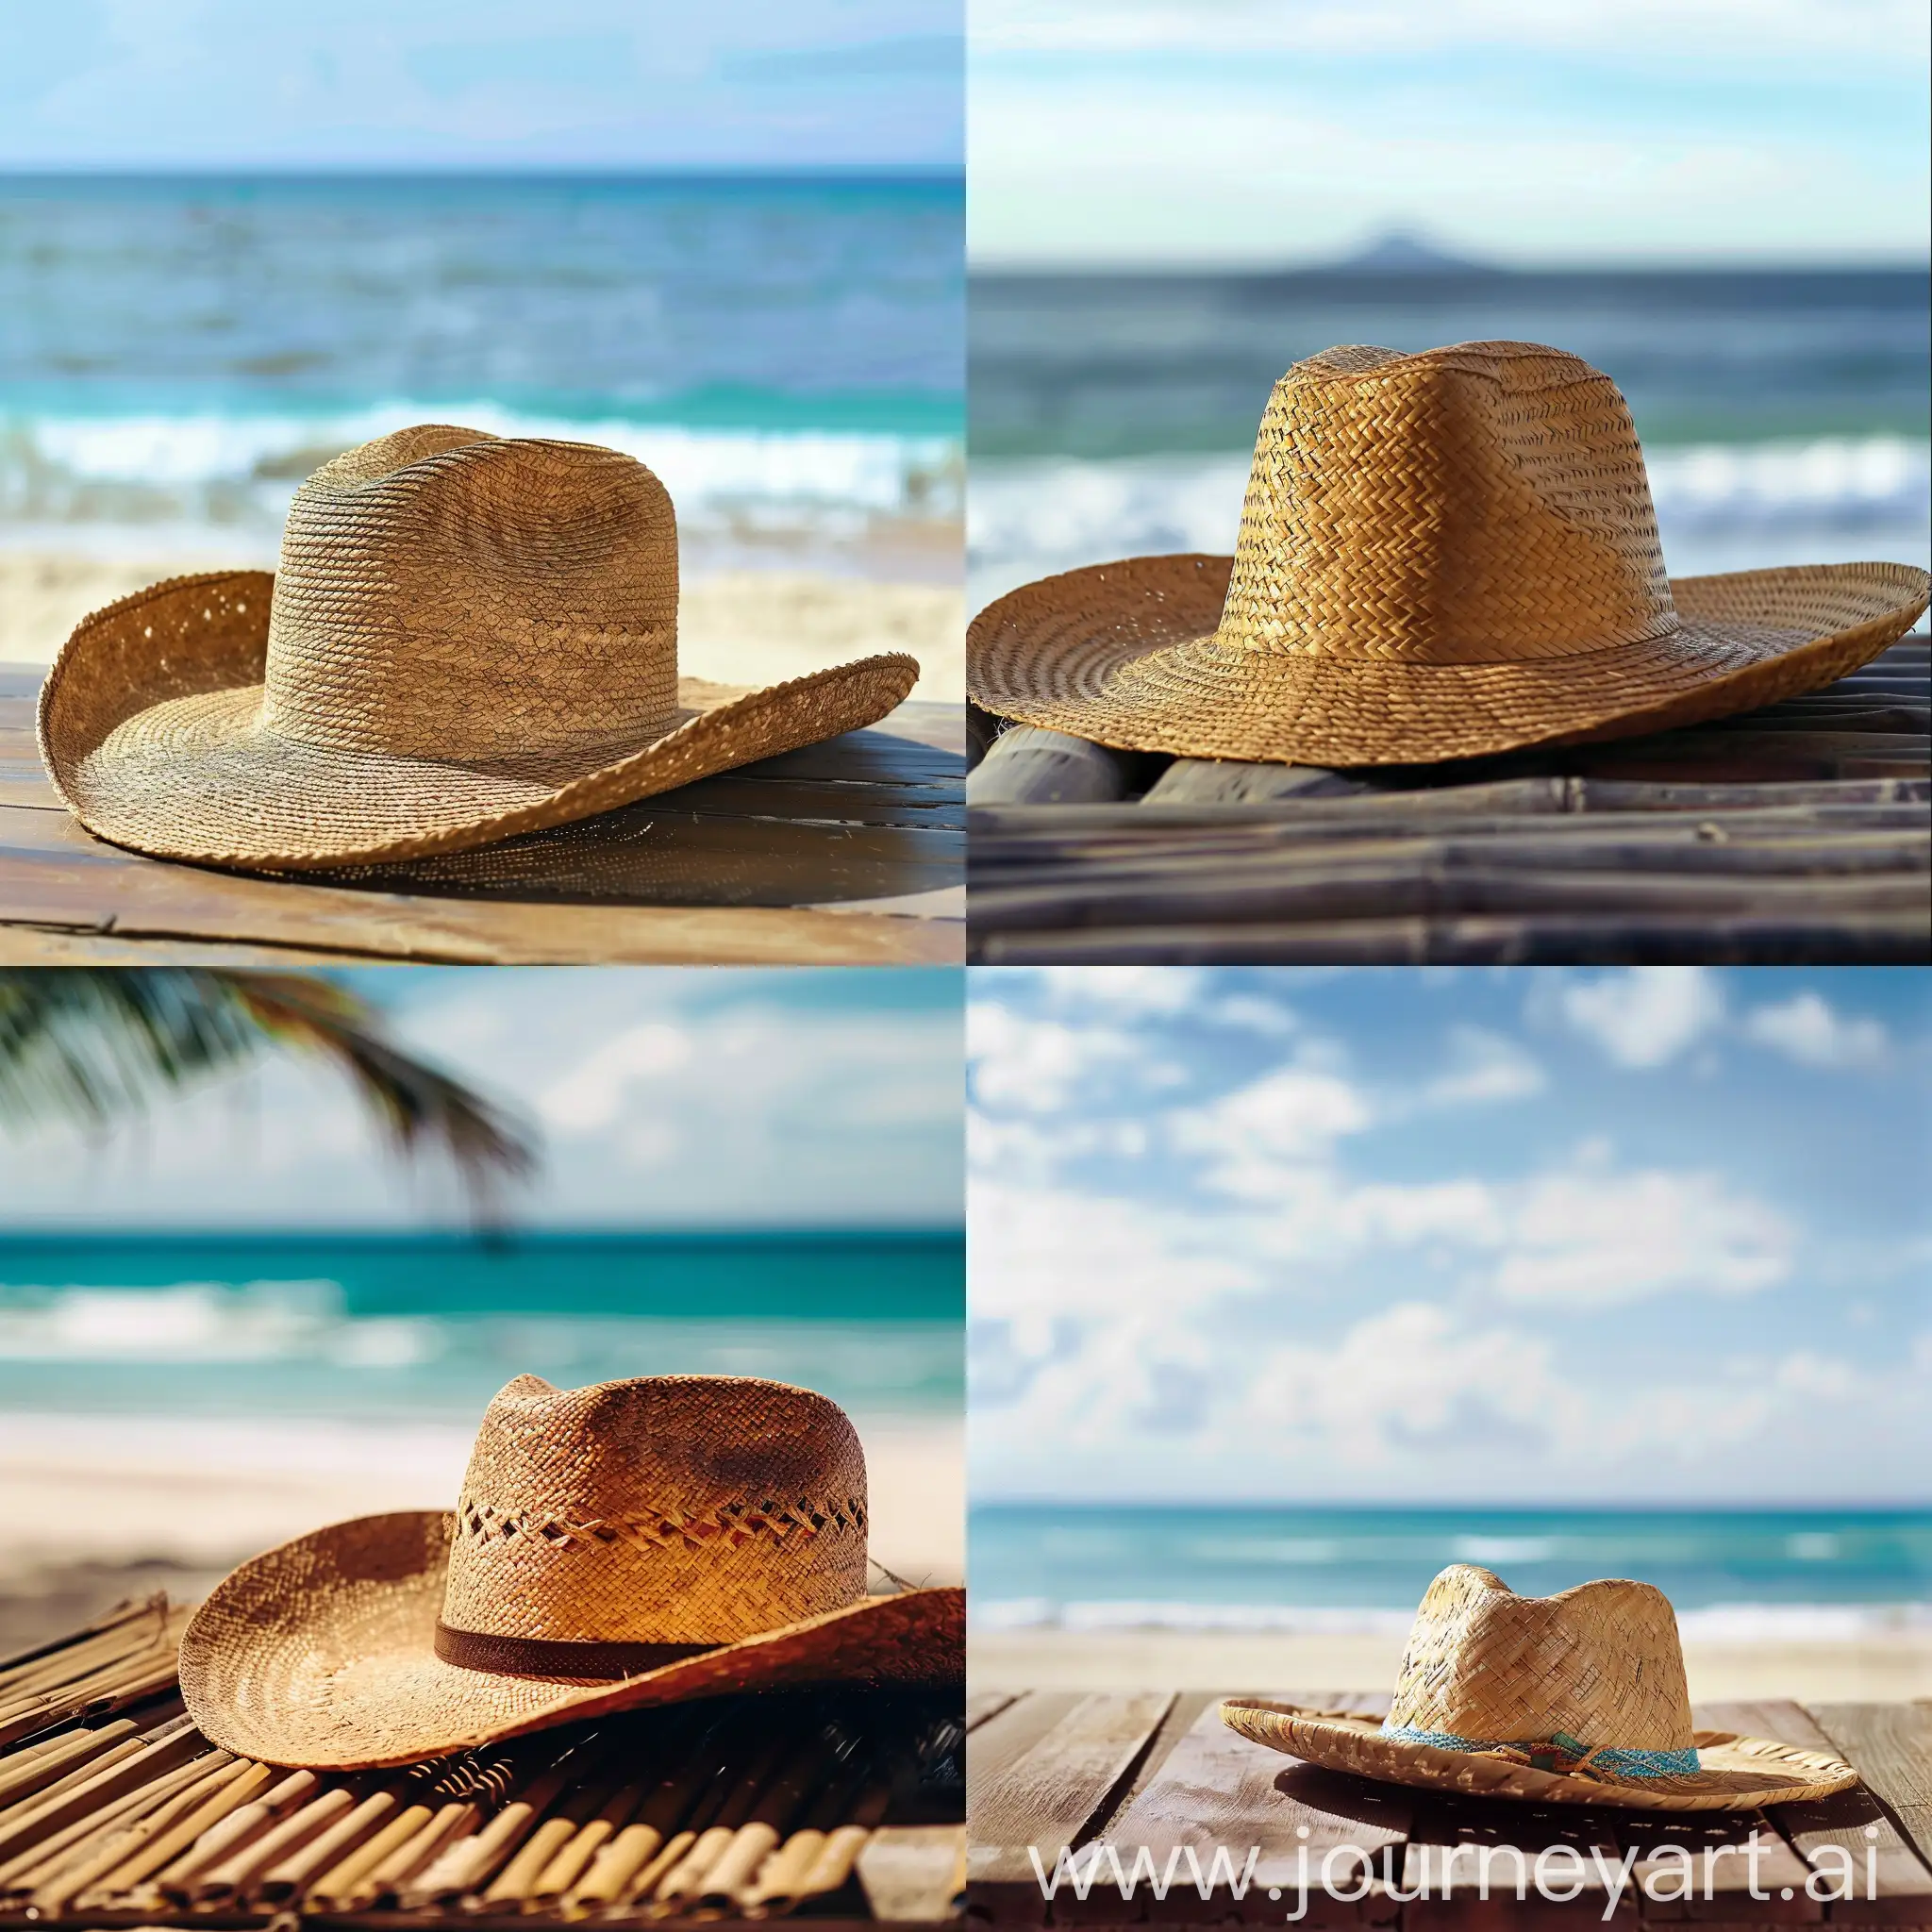 Beach-Scene-Sombrero-Resting-on-Table